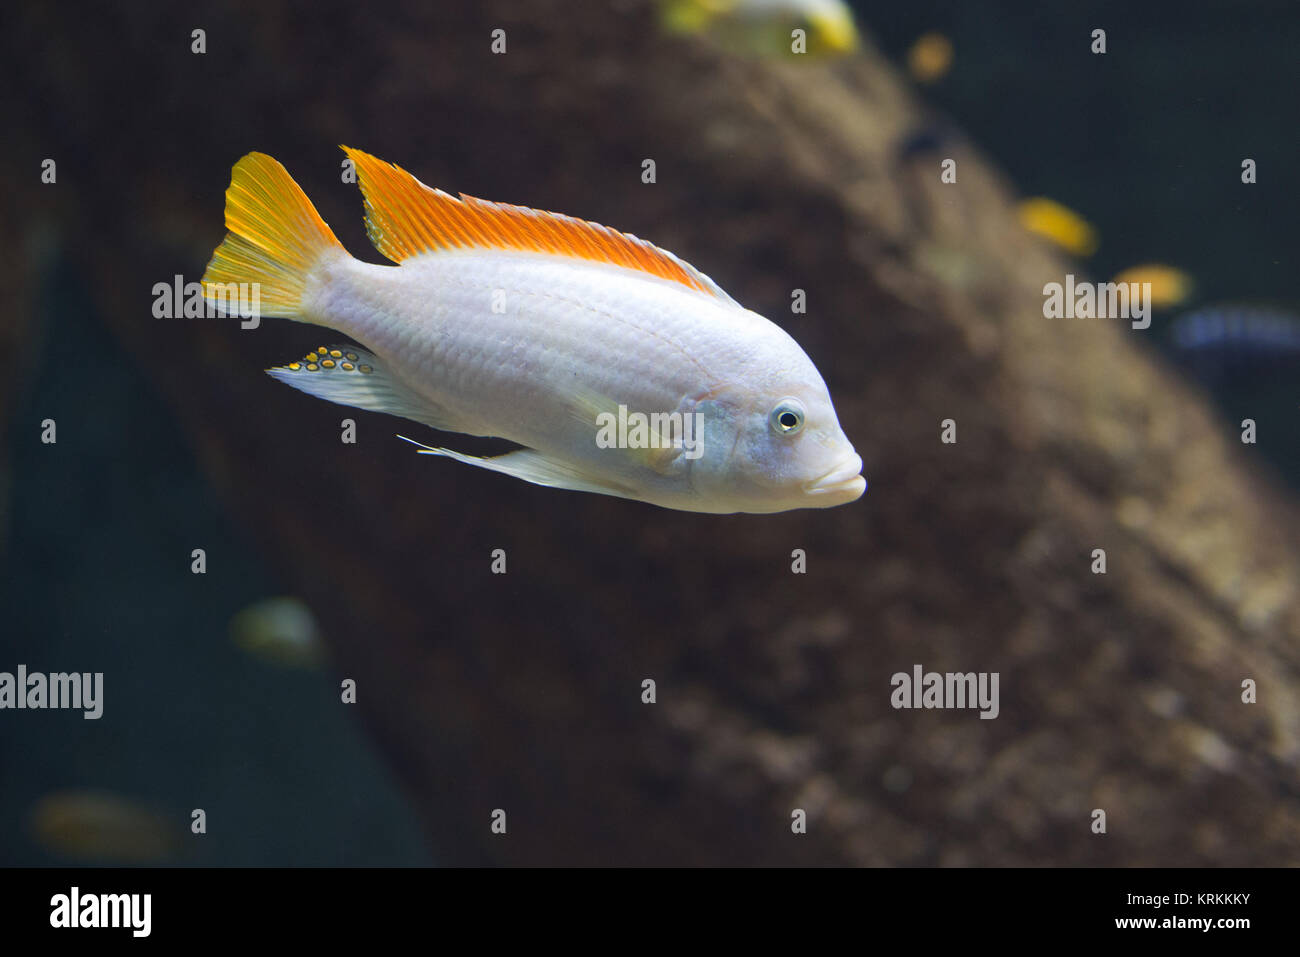 close up on maylandia hajomaylandi,malawi fish Stock Photo